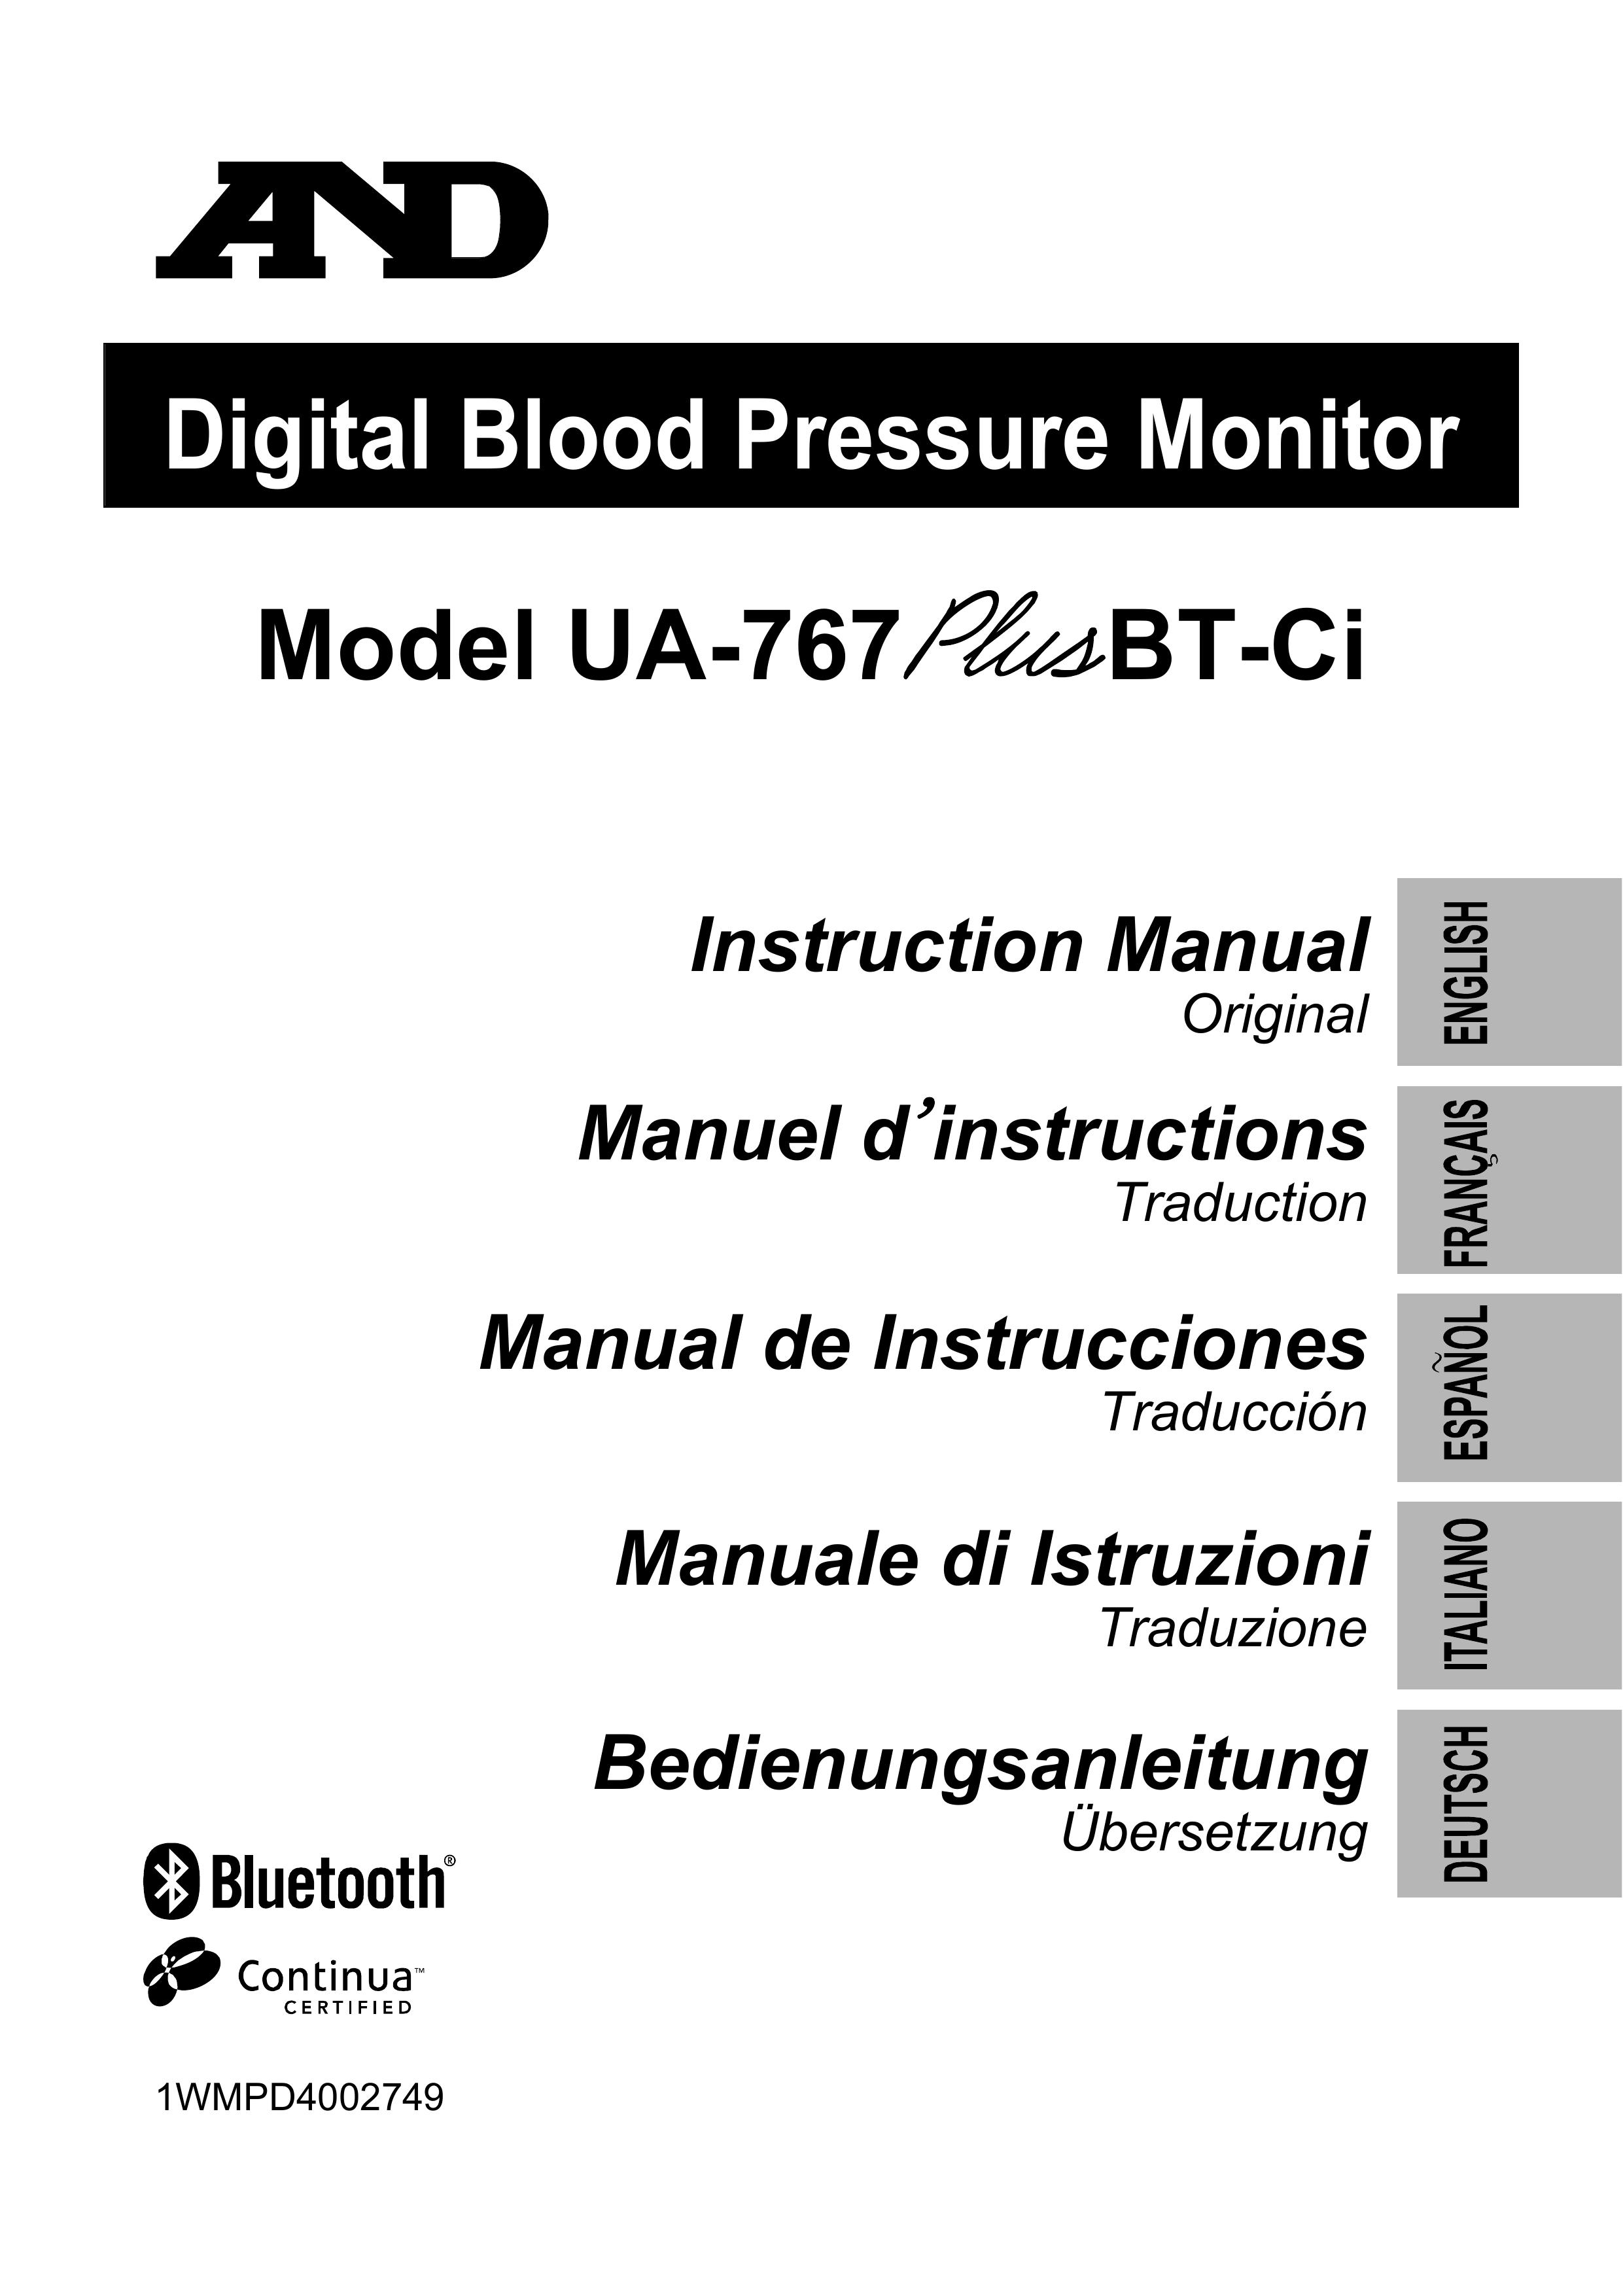 A&D BT-Ci Blood Pressure Monitor User Manual